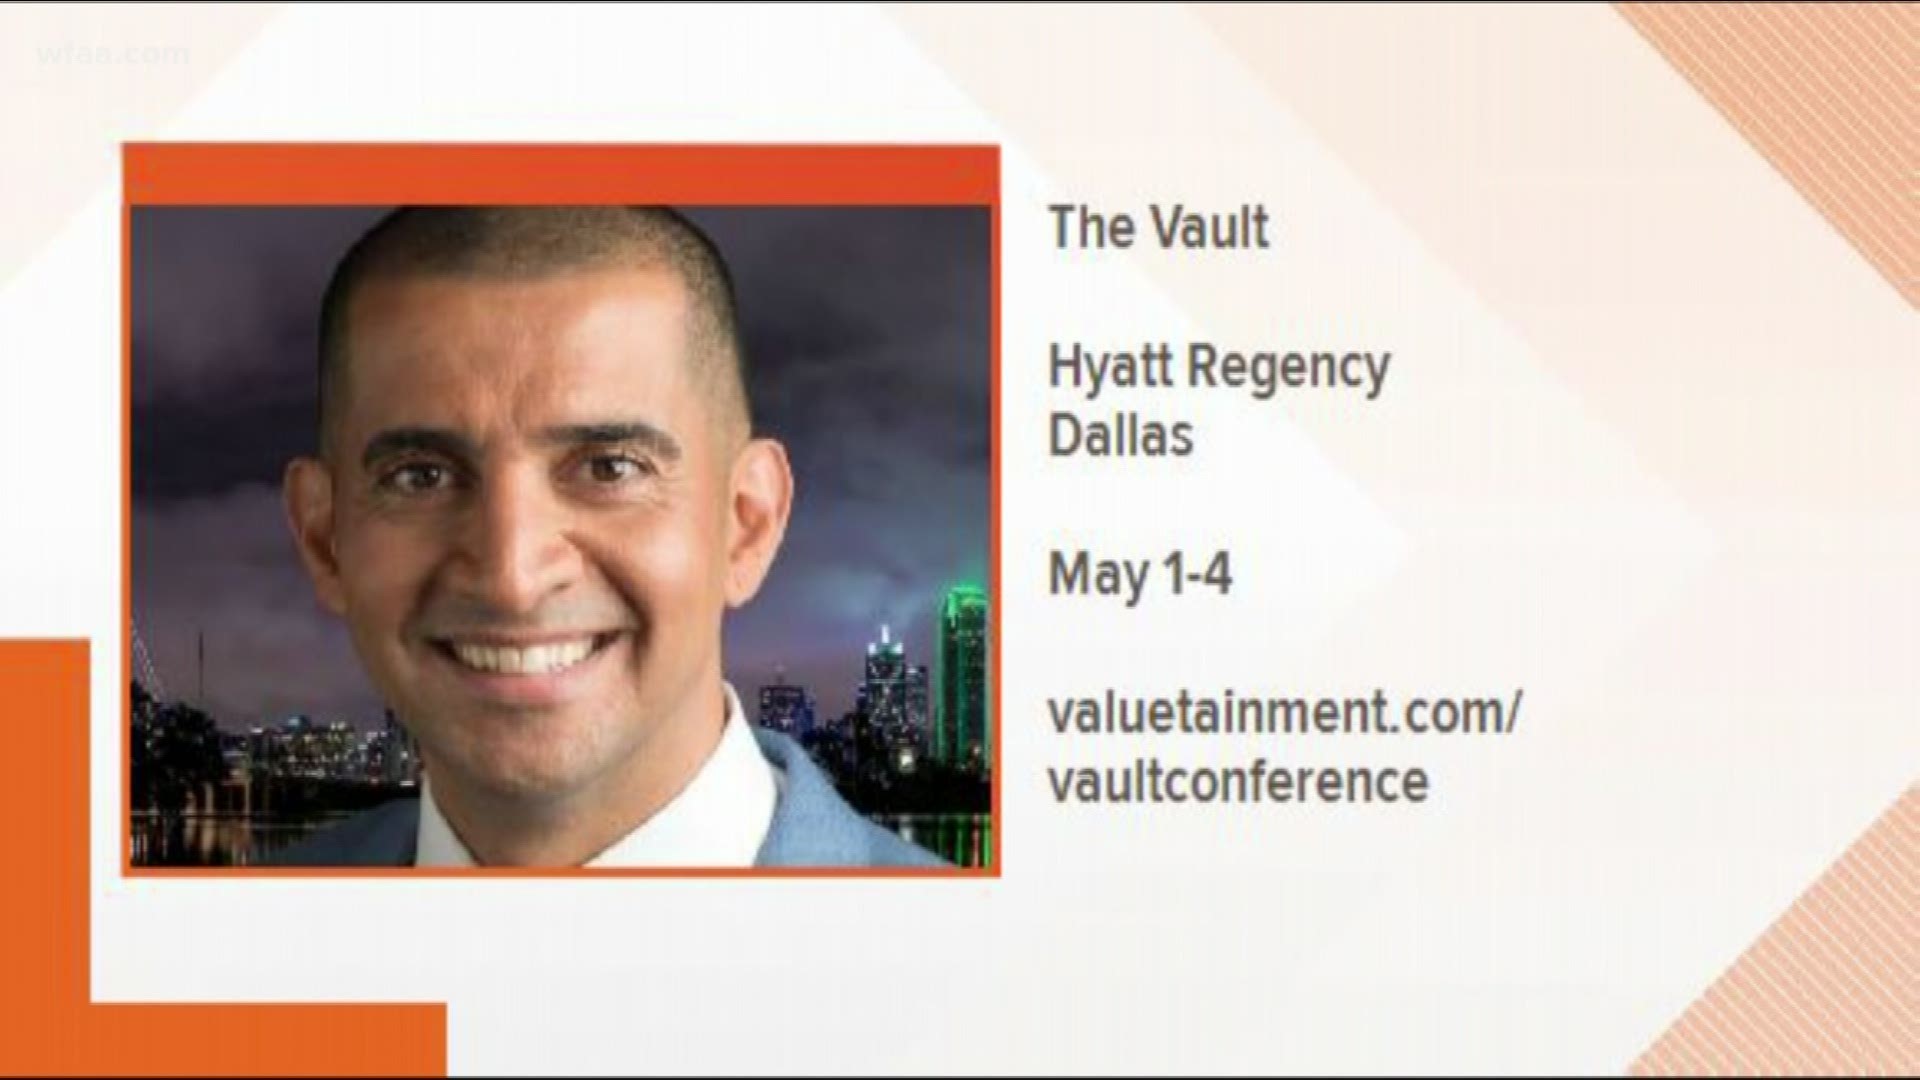 'Valuetainment' Entrepreneur Patrick Bet-David to Host 'The Vault' Conference